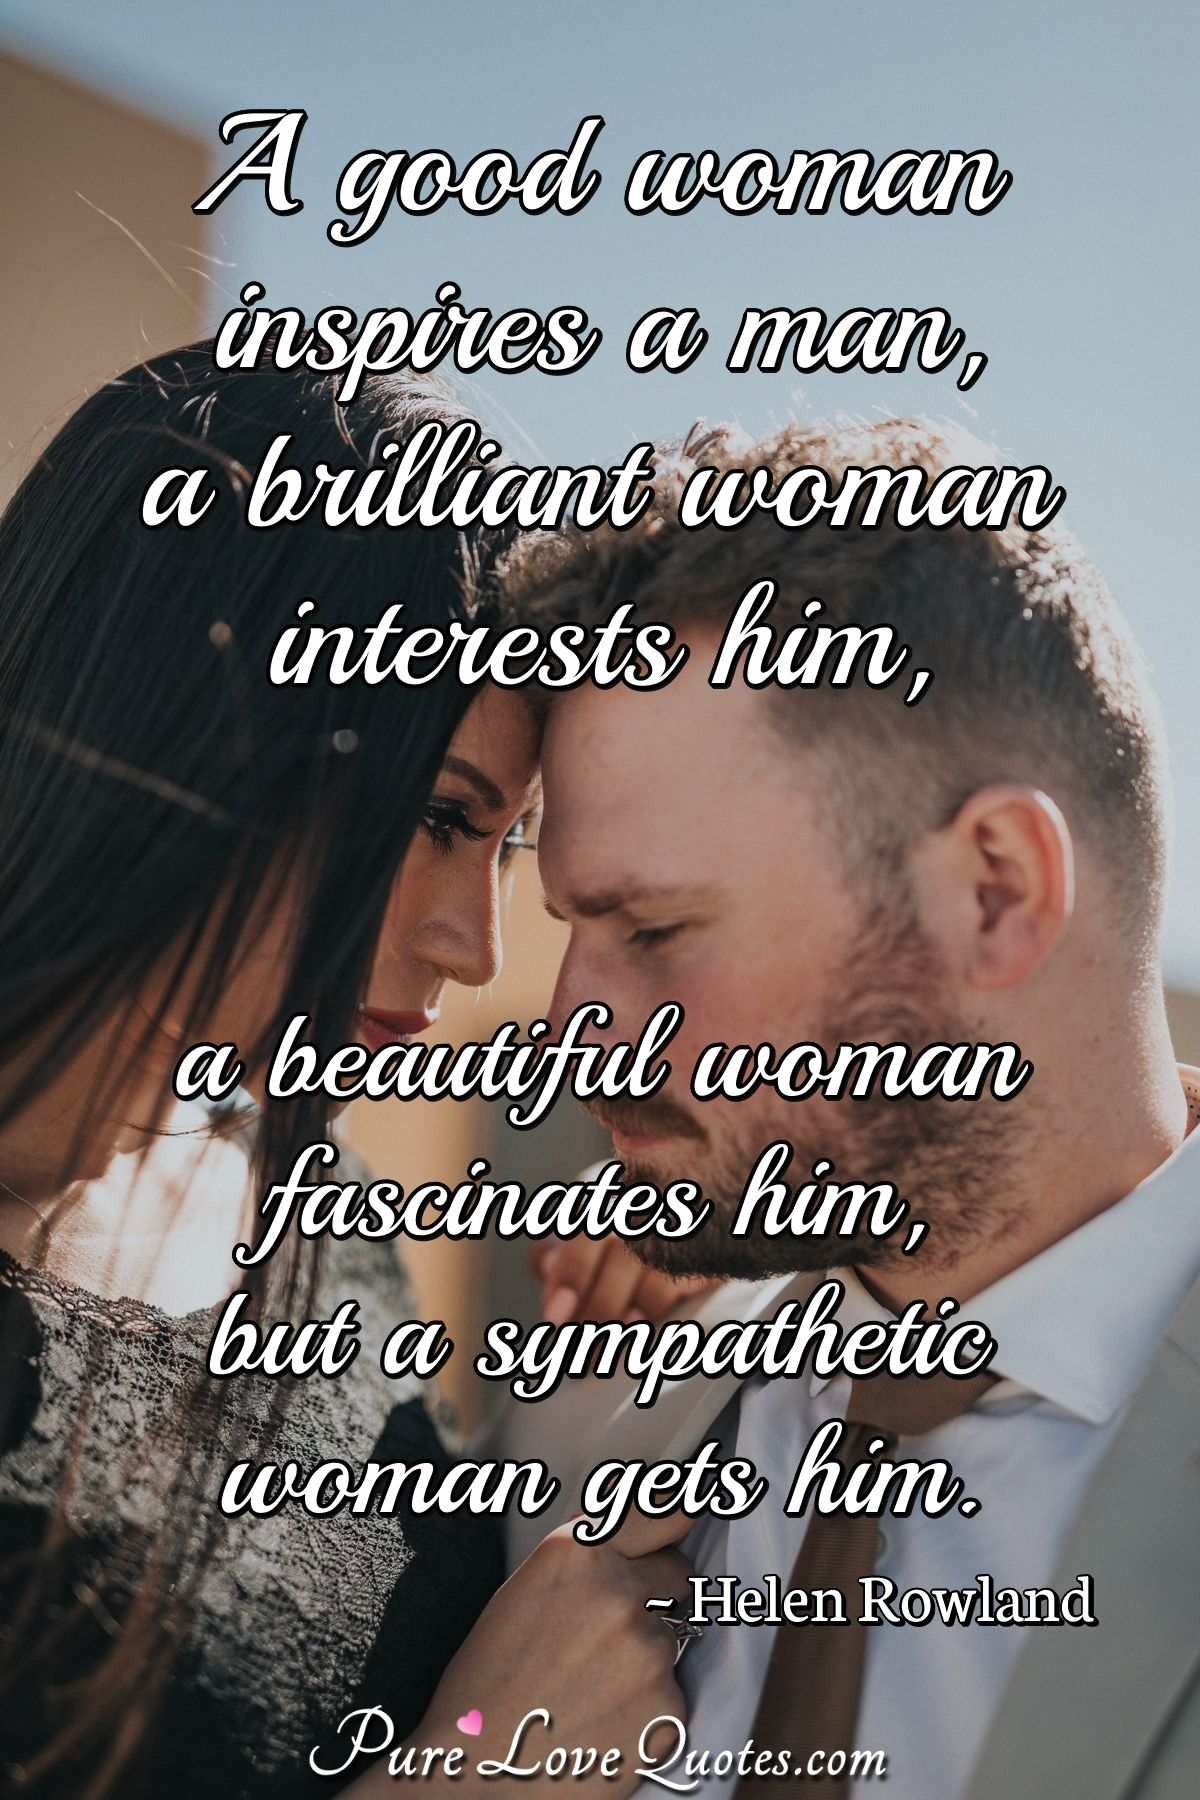 A good woman inspires a man, a brilliant woman interests him, a beautiful woman fascinates him, but a sympathetic woman gets him. - Helen Rowland